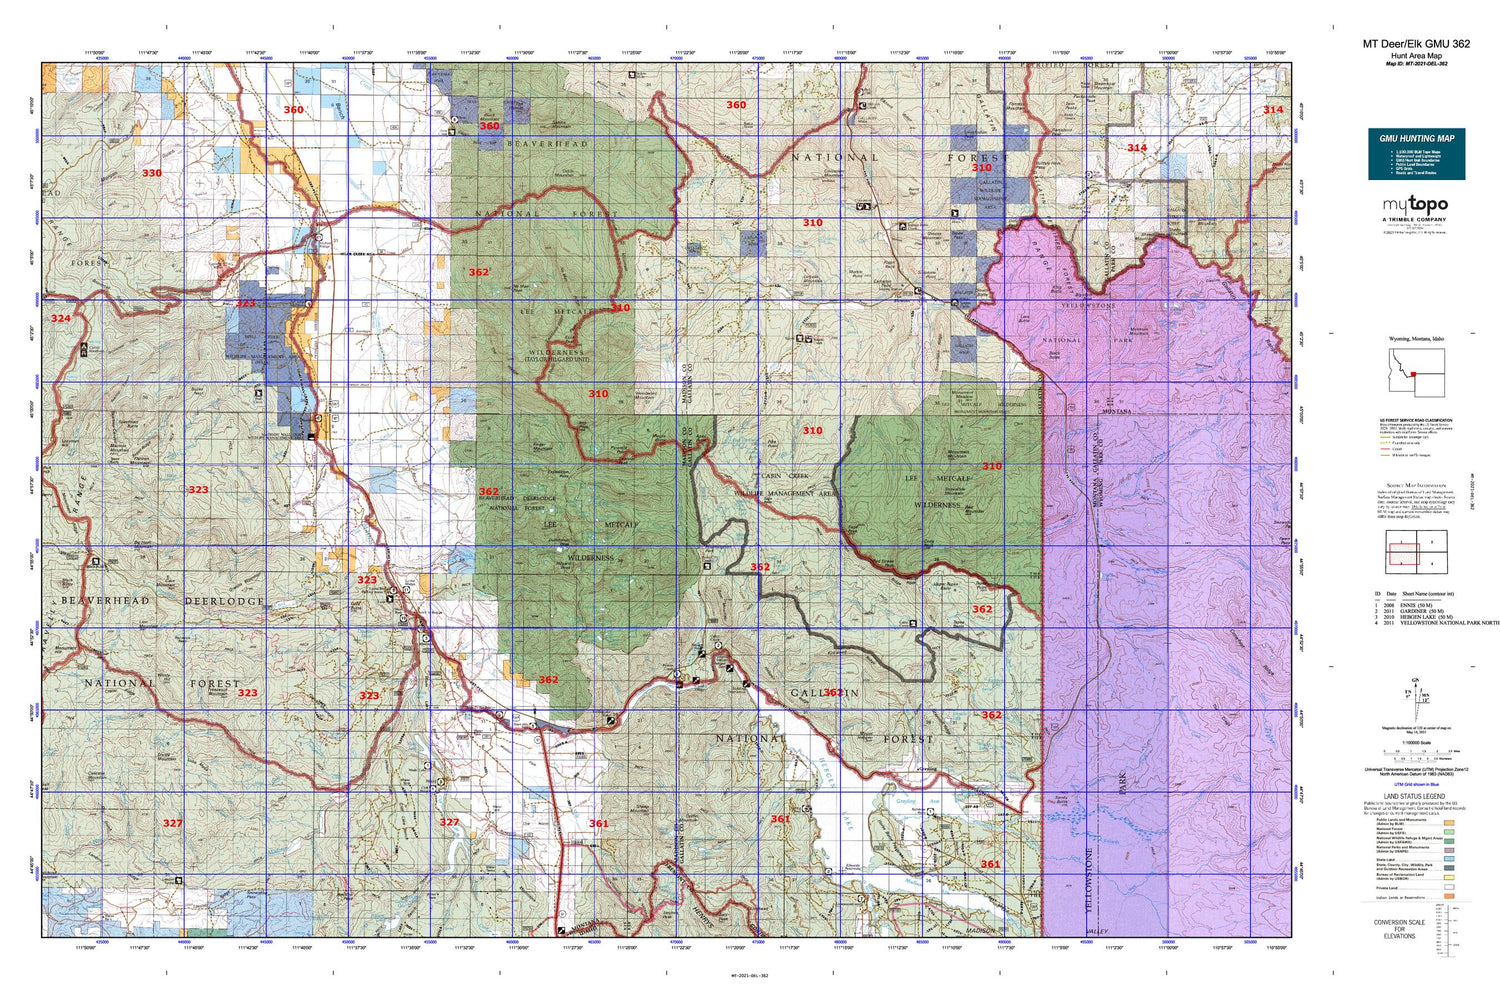 Montana Deer/Elk GMU 362 Map Image